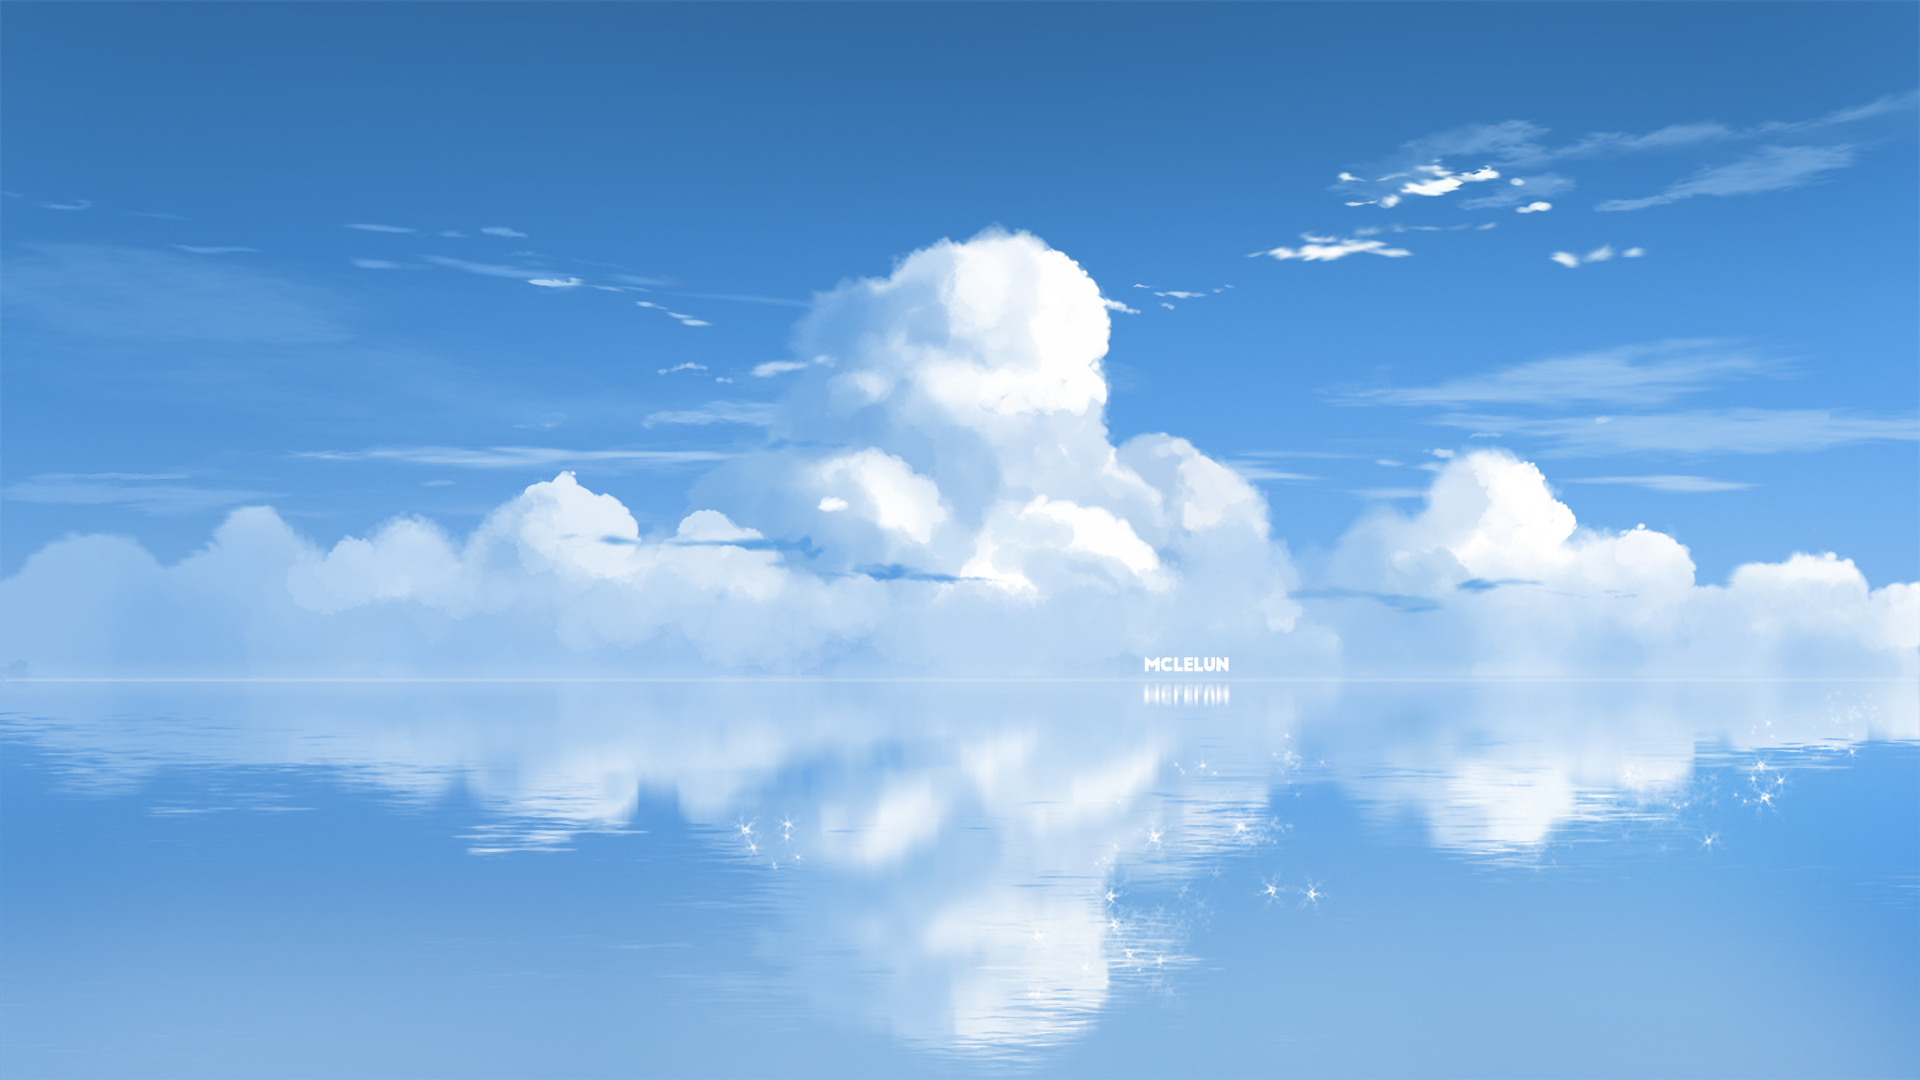 Download Cloud Anime Sky HD Wallpaper by Mclelun